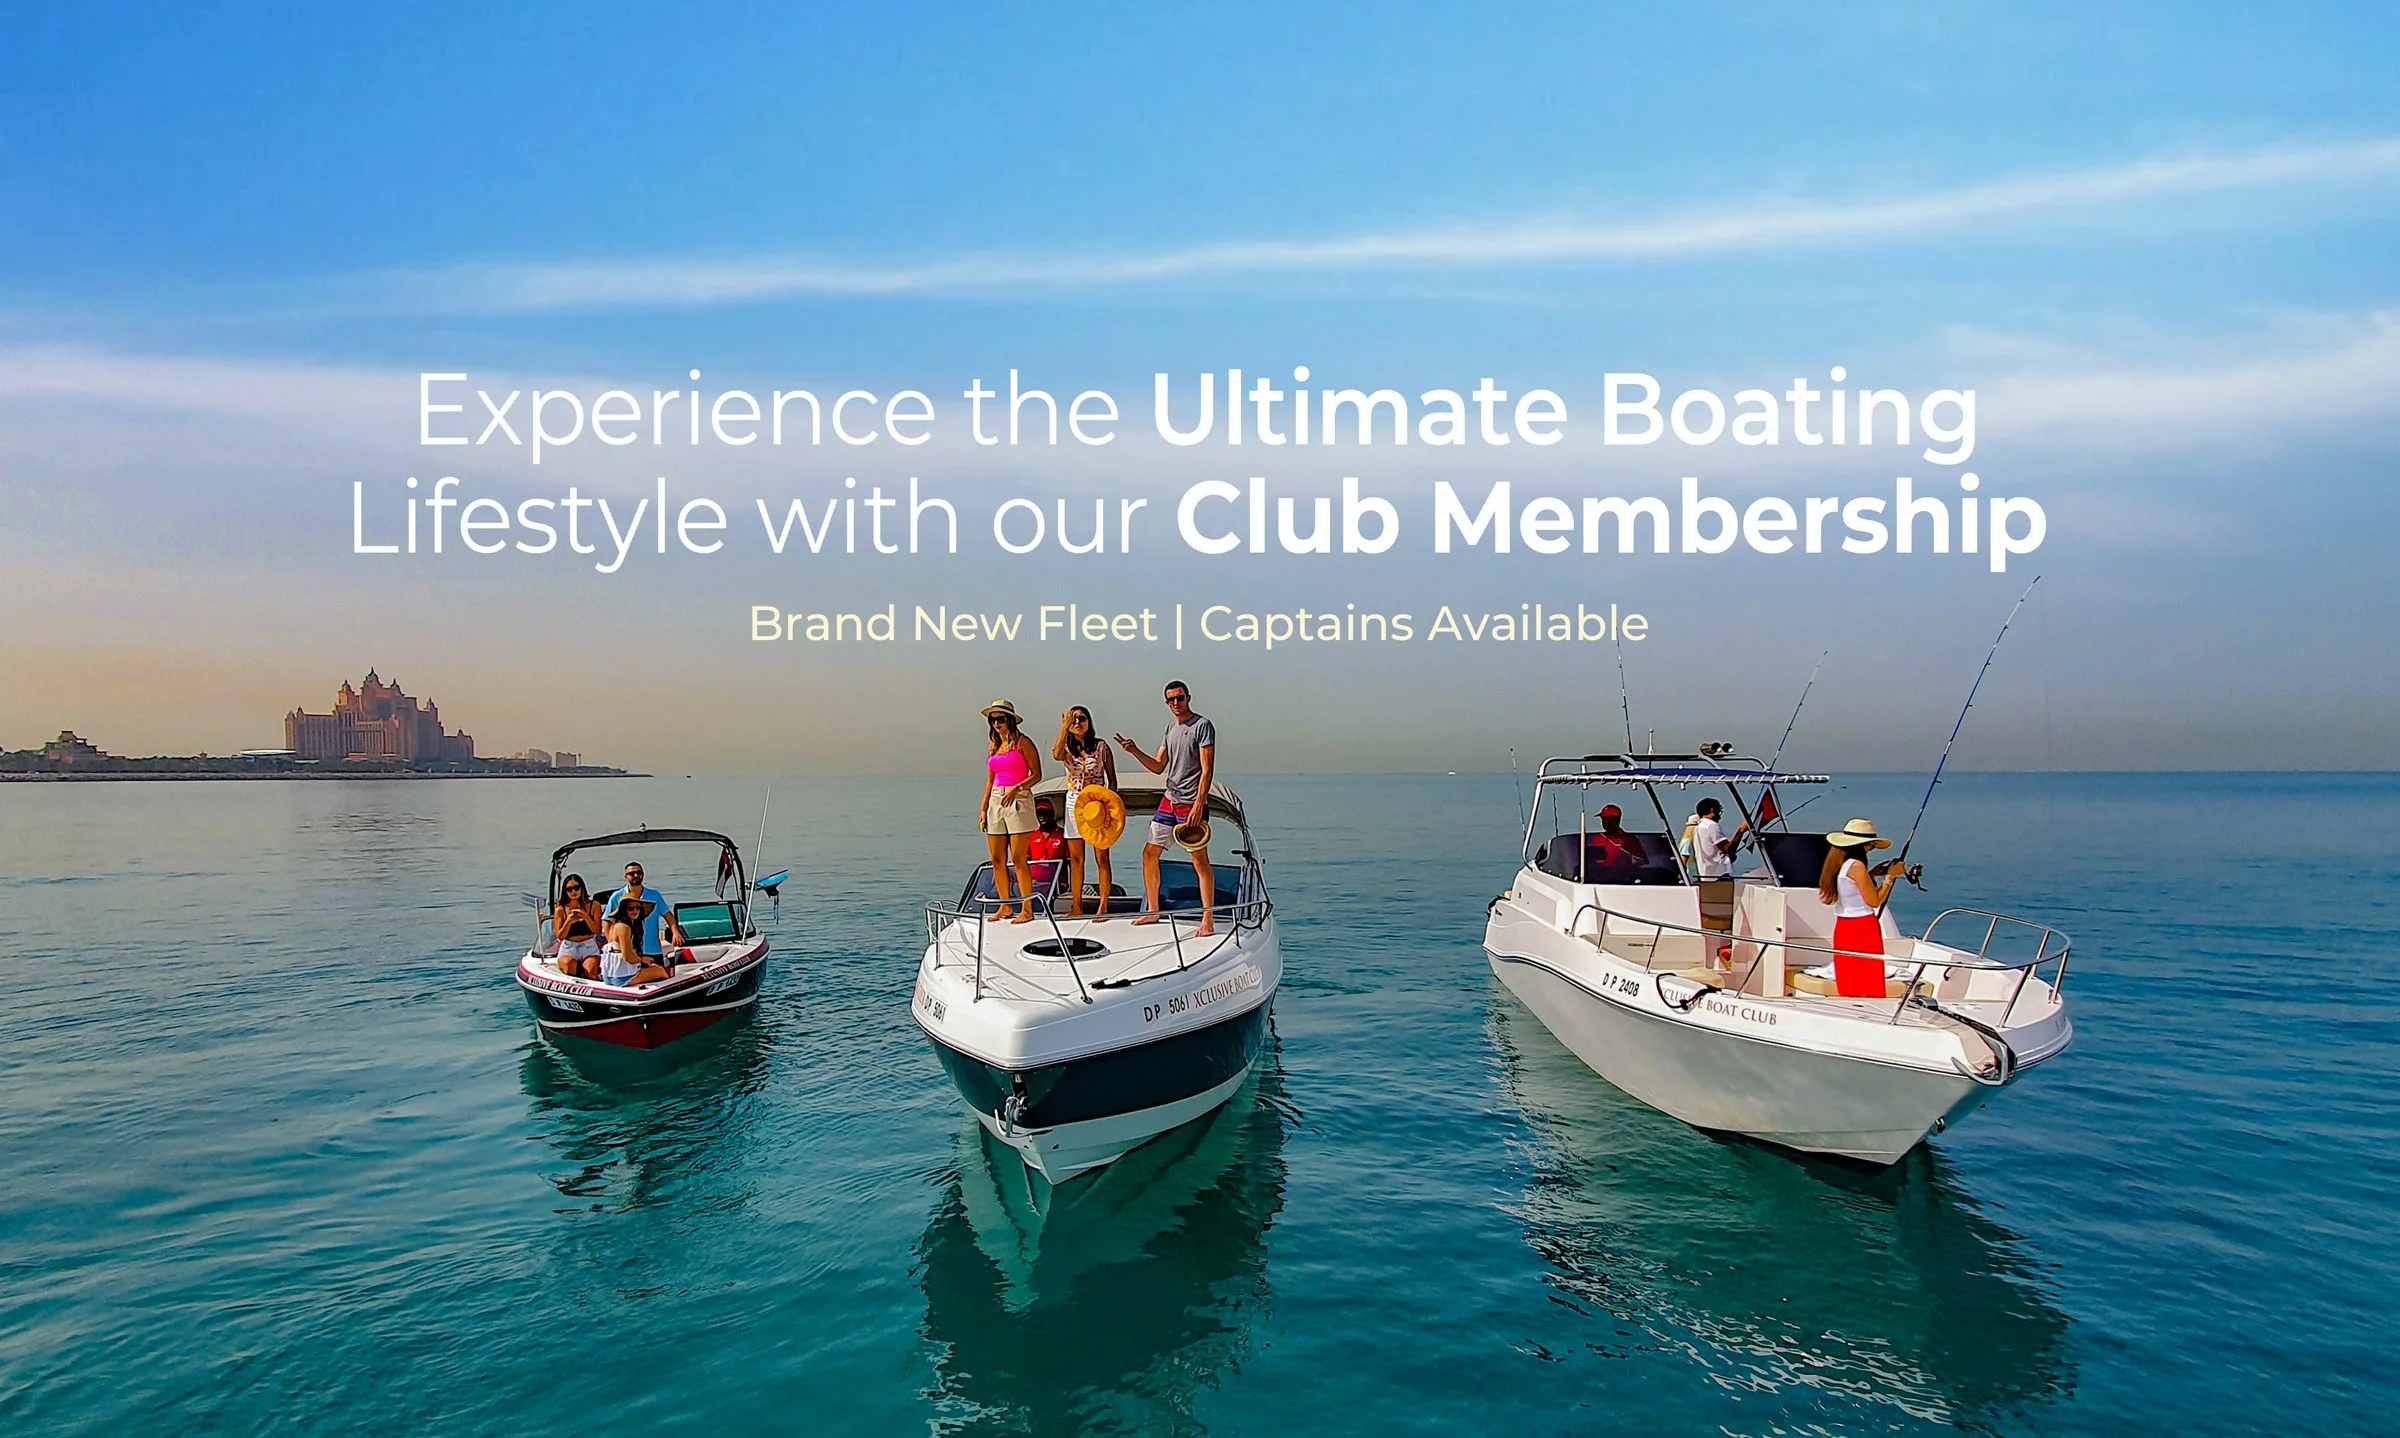 Dubai’s Premier Boat Club